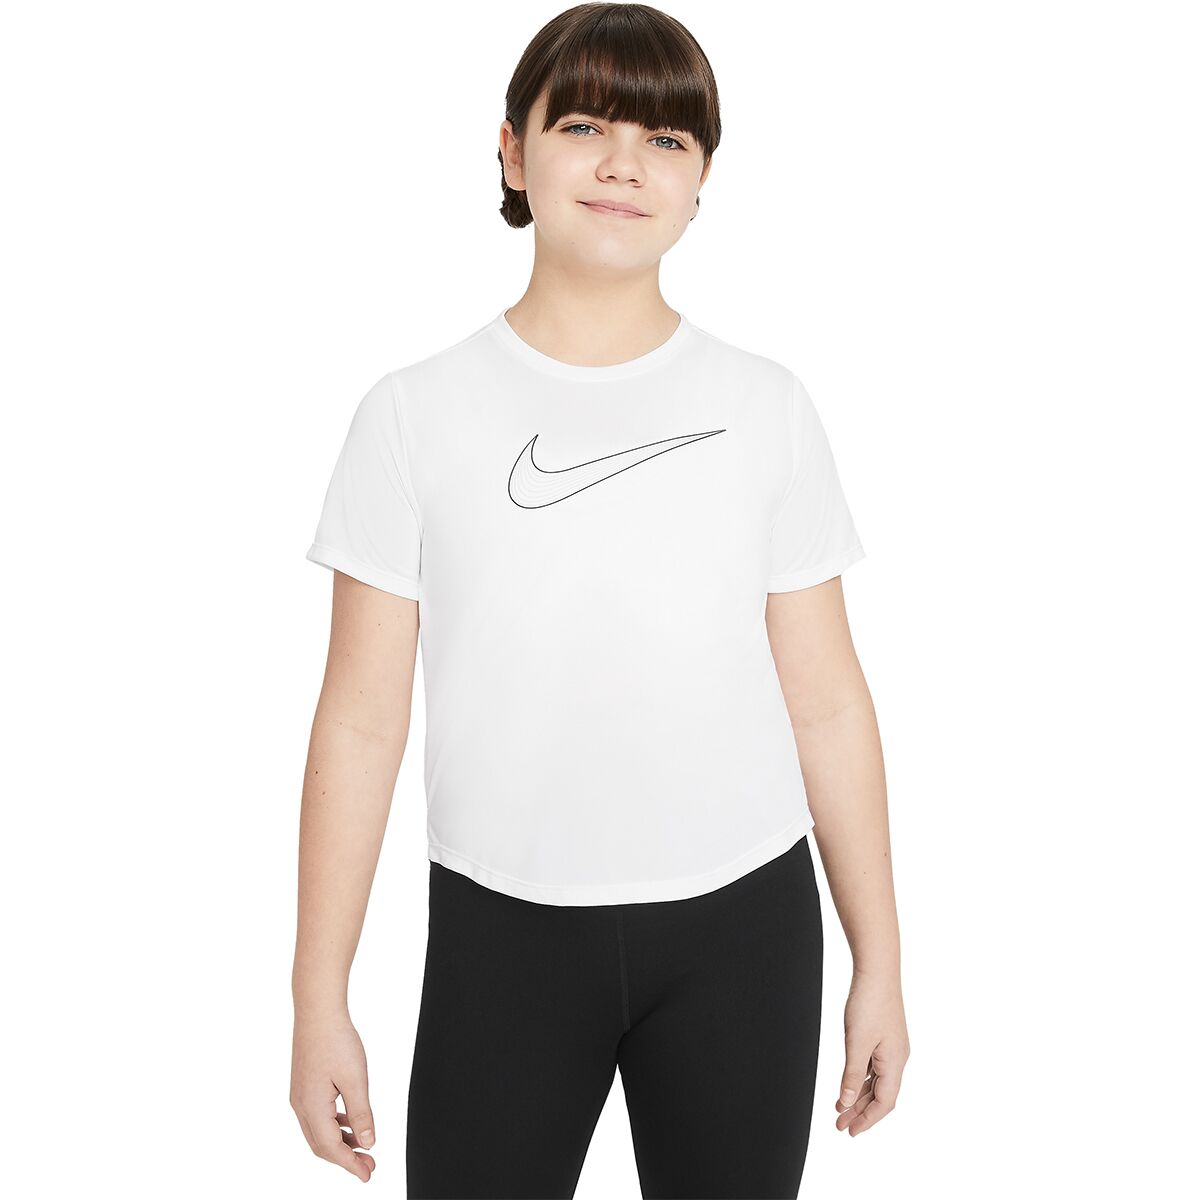 Nike Dri-Fit One GX Short-Sleeve Top - Girls'